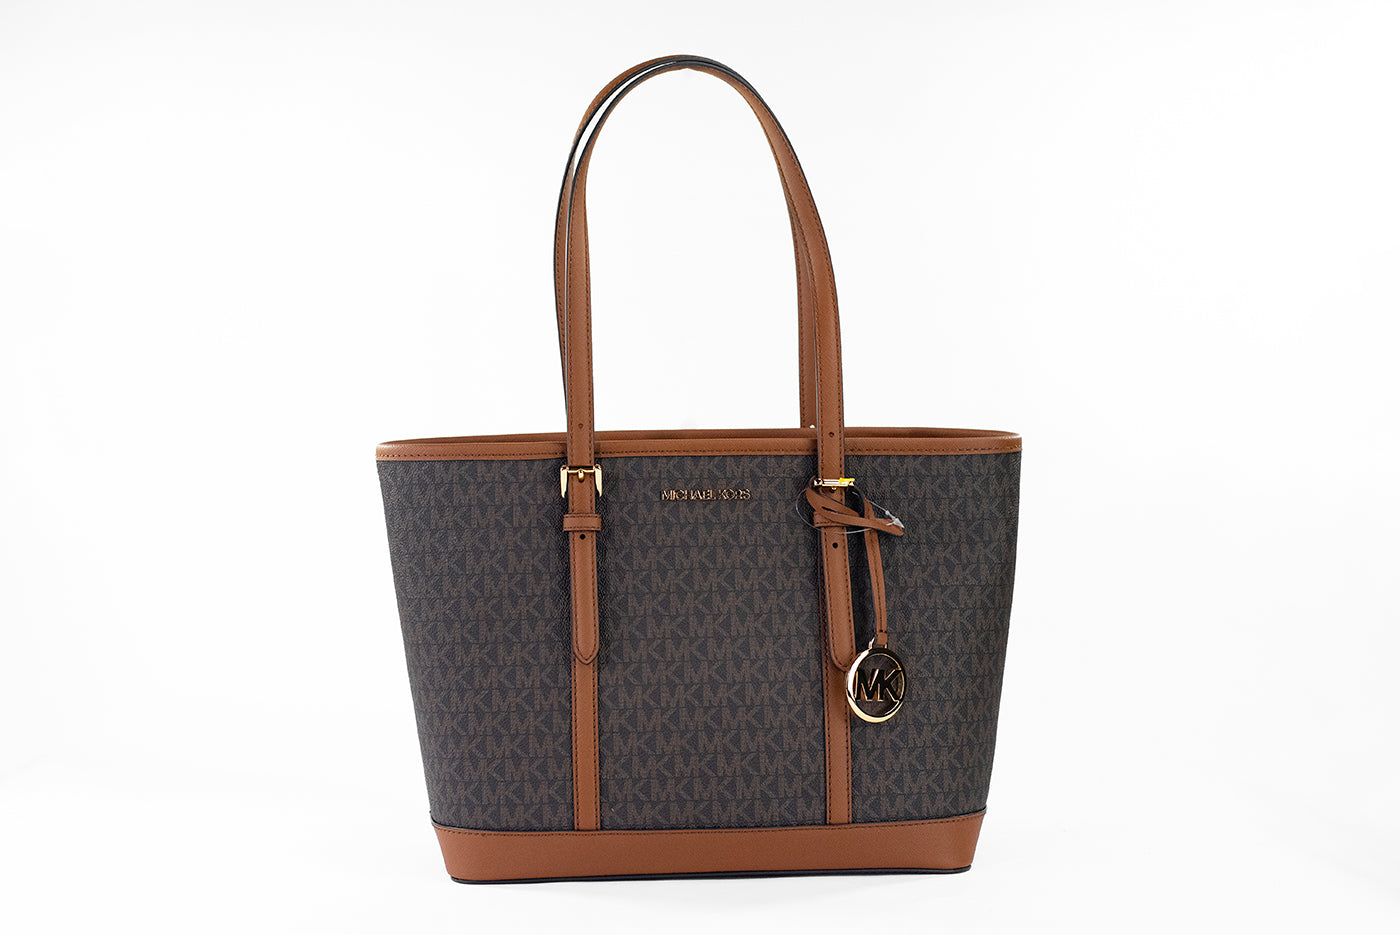 Jet Set Travel Small Brown PVC Shoulder Tote Handbag Bag Purse - Divitiae Glamour